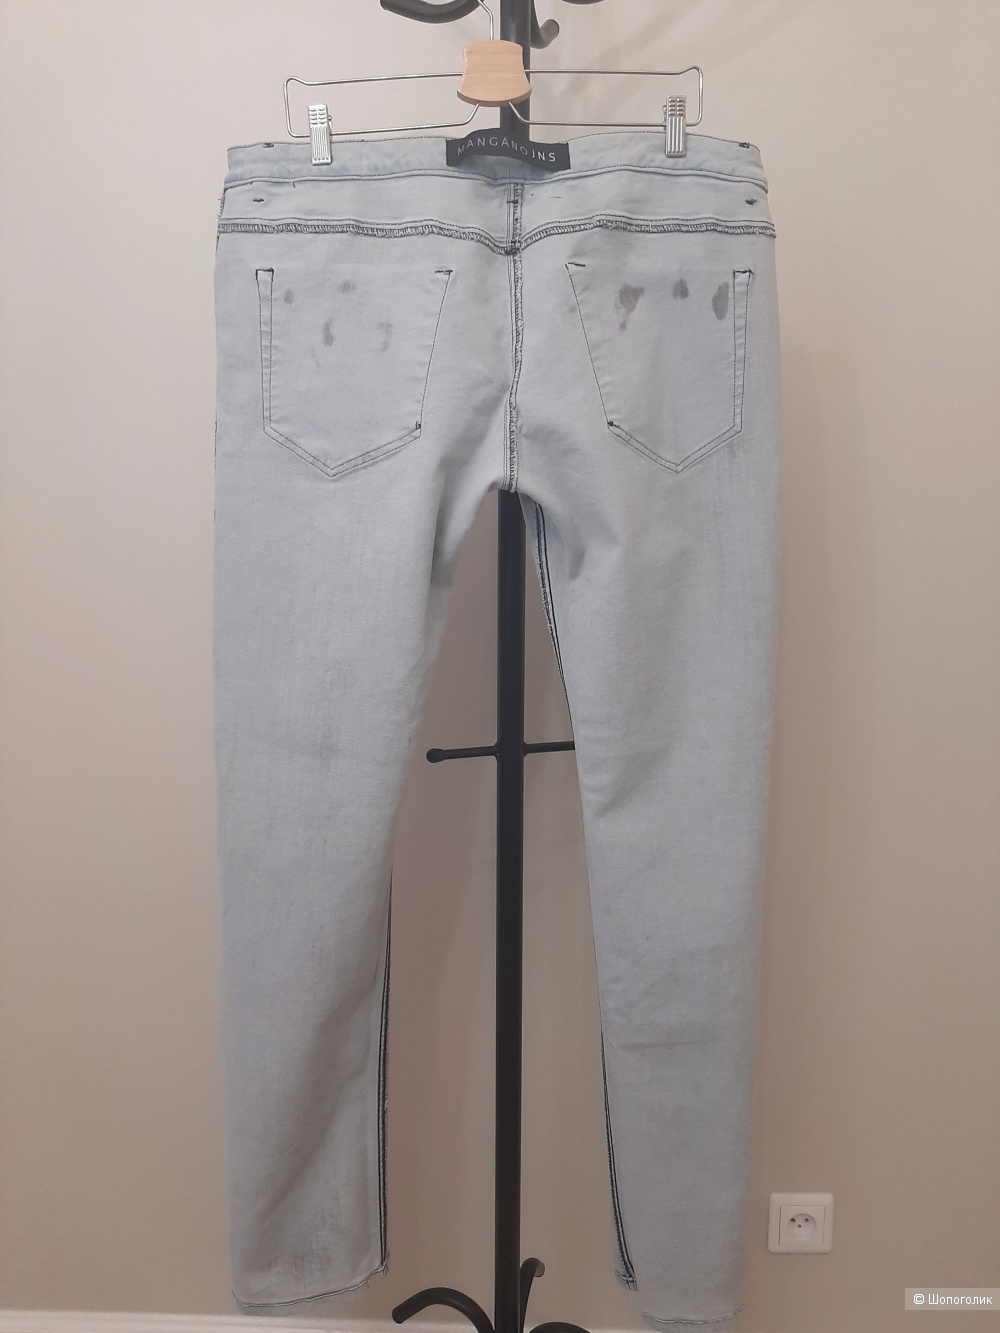 Мужские джинсы Mangano, W38 (54)